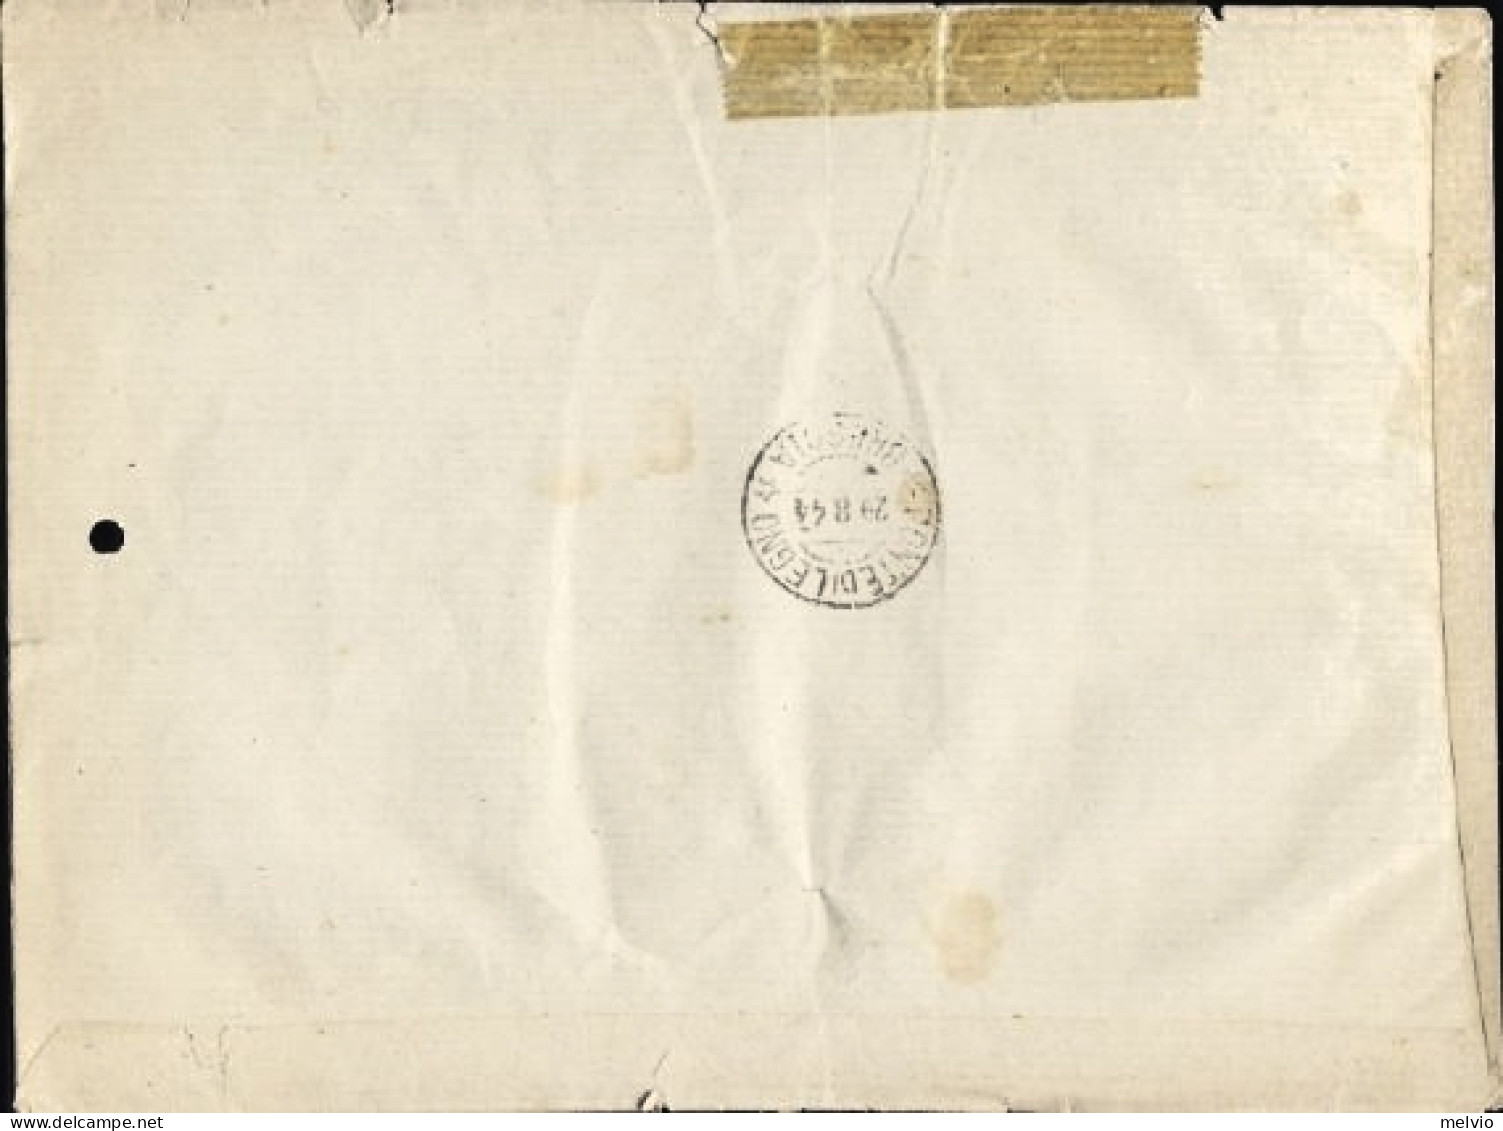 1944-manoscritti Raccomandati Da Virle Tre Ponti BS Affrancata L.1 Imperiale + C - Poststempel